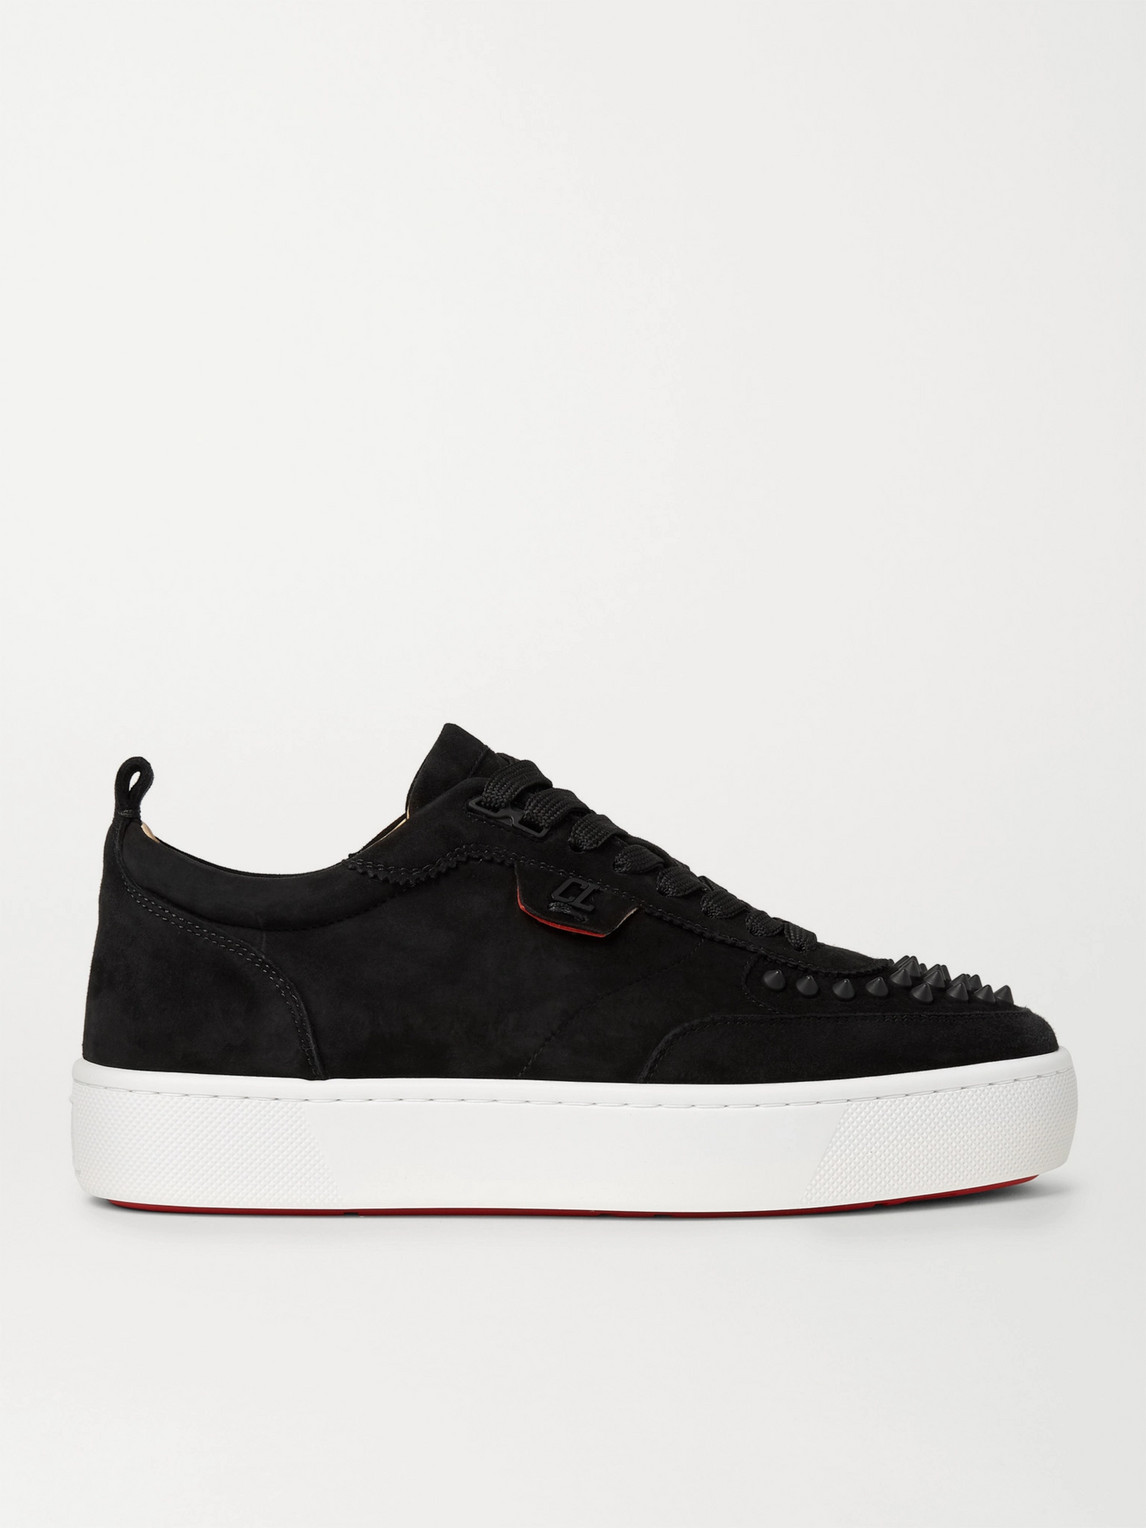 Christian Louboutin Black Happyrui Spikes Sneakers In B026 Black/black Mat